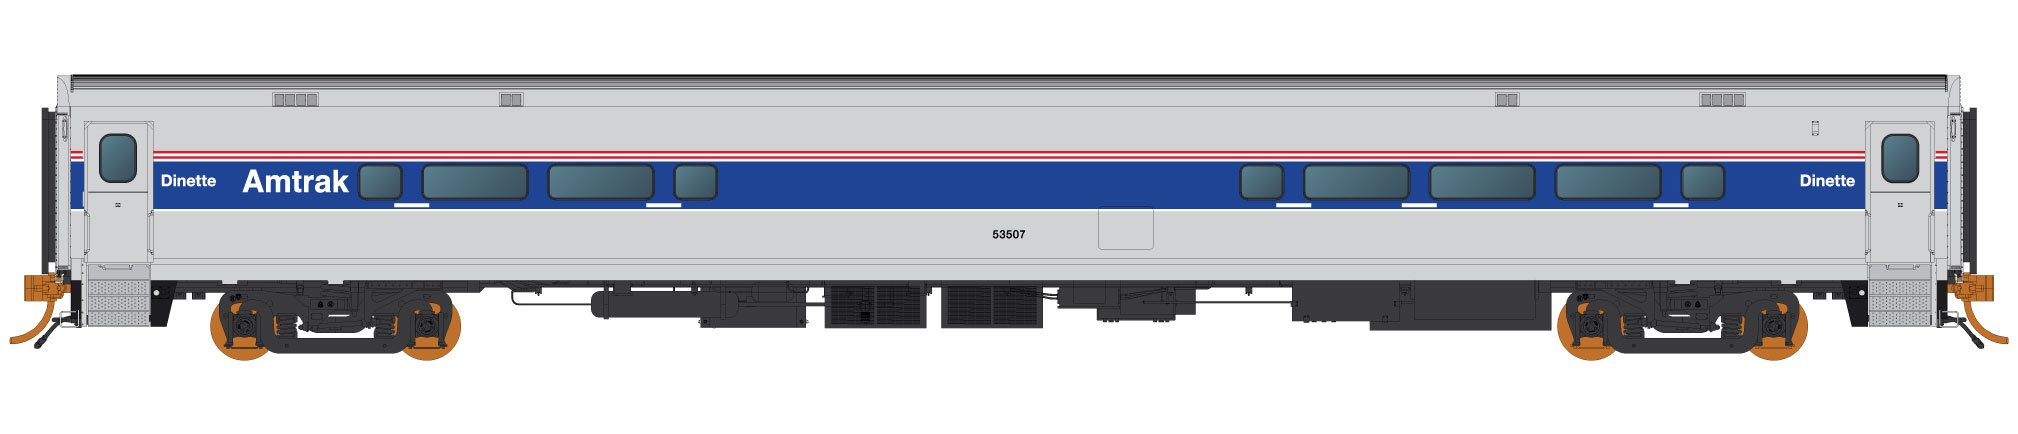 Rapido 528026 - N Scale Horizon Fleet Dinette - Amtrak Phase IV #53003